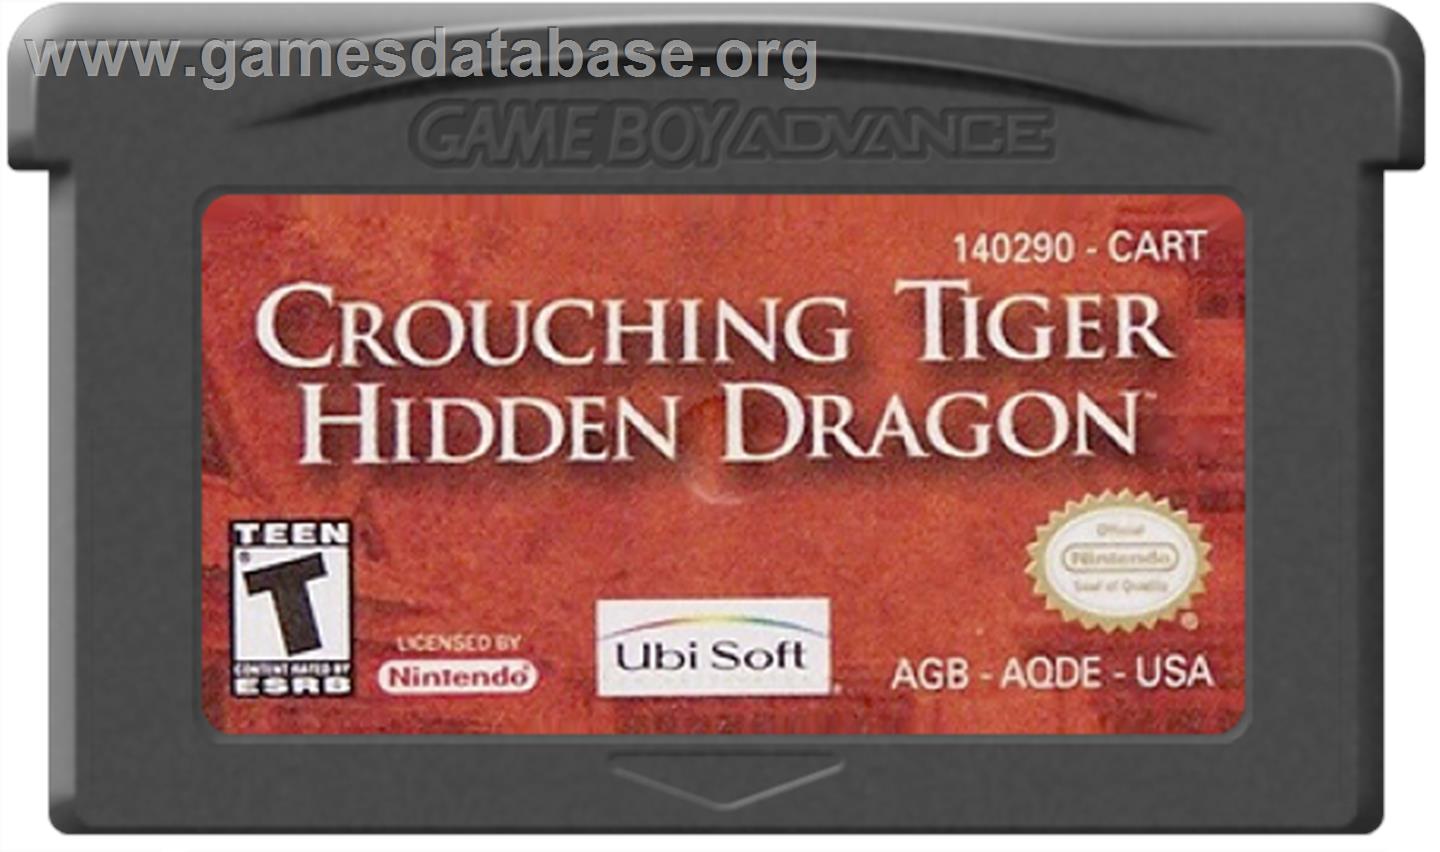 Crouching Tiger, Hidden Dragon - Nintendo Game Boy Advance - Artwork - Cartridge